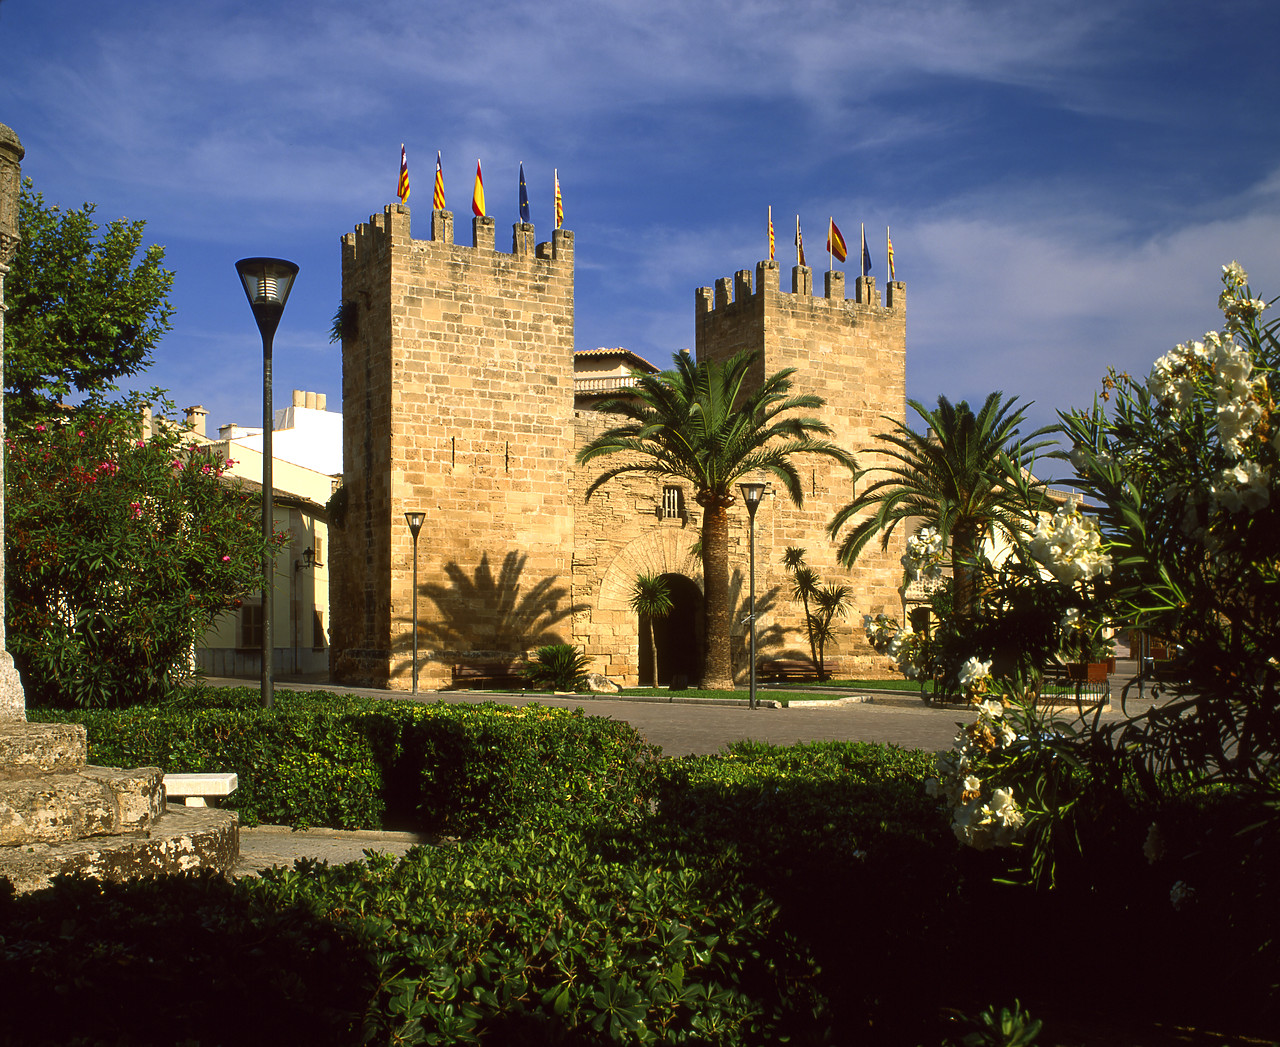 #050252-1 - Old Walled Gates, Alcœdia, Mallorca, Spain